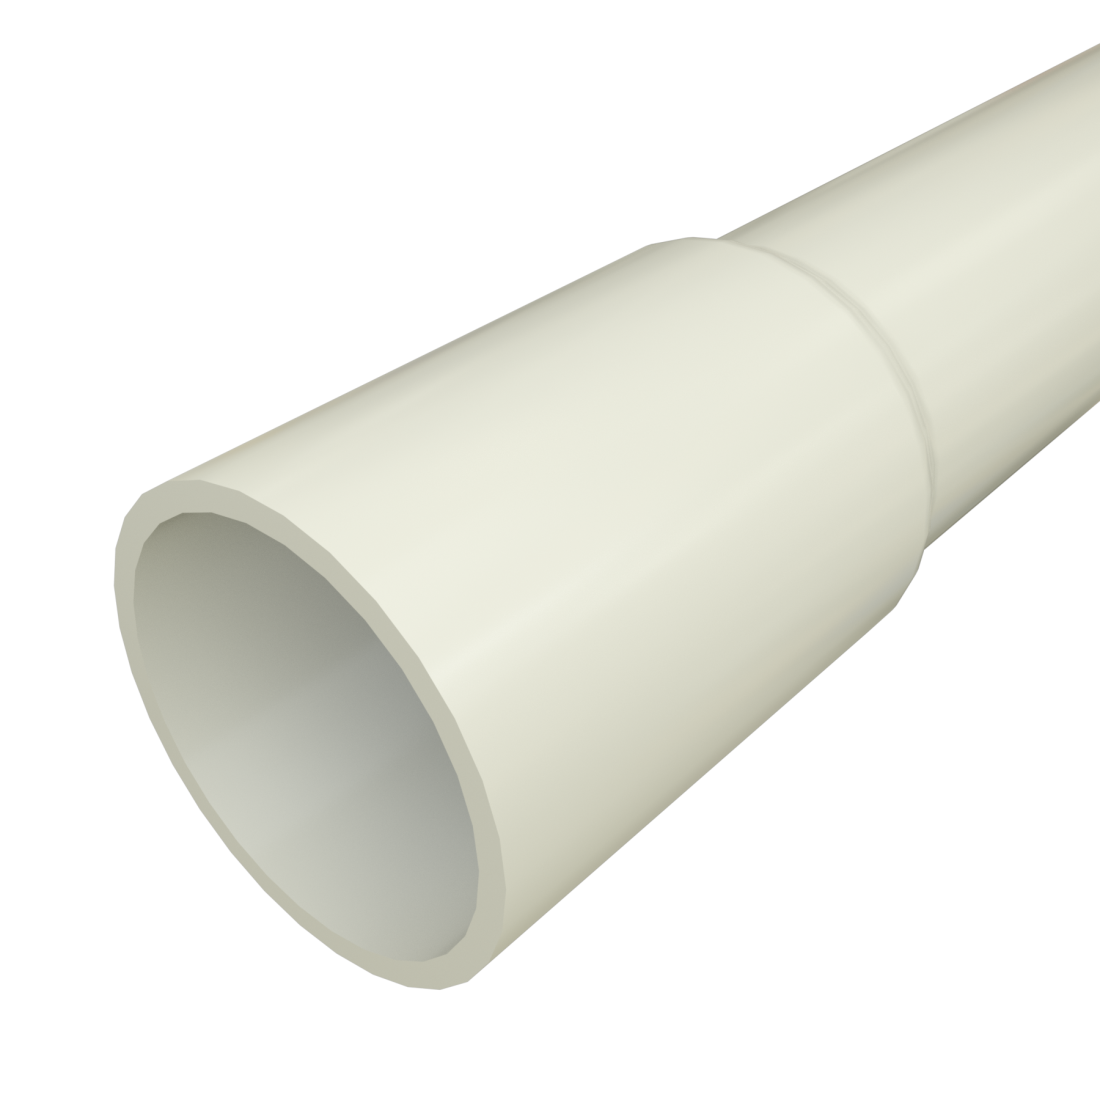 PVC Drainage Pipe